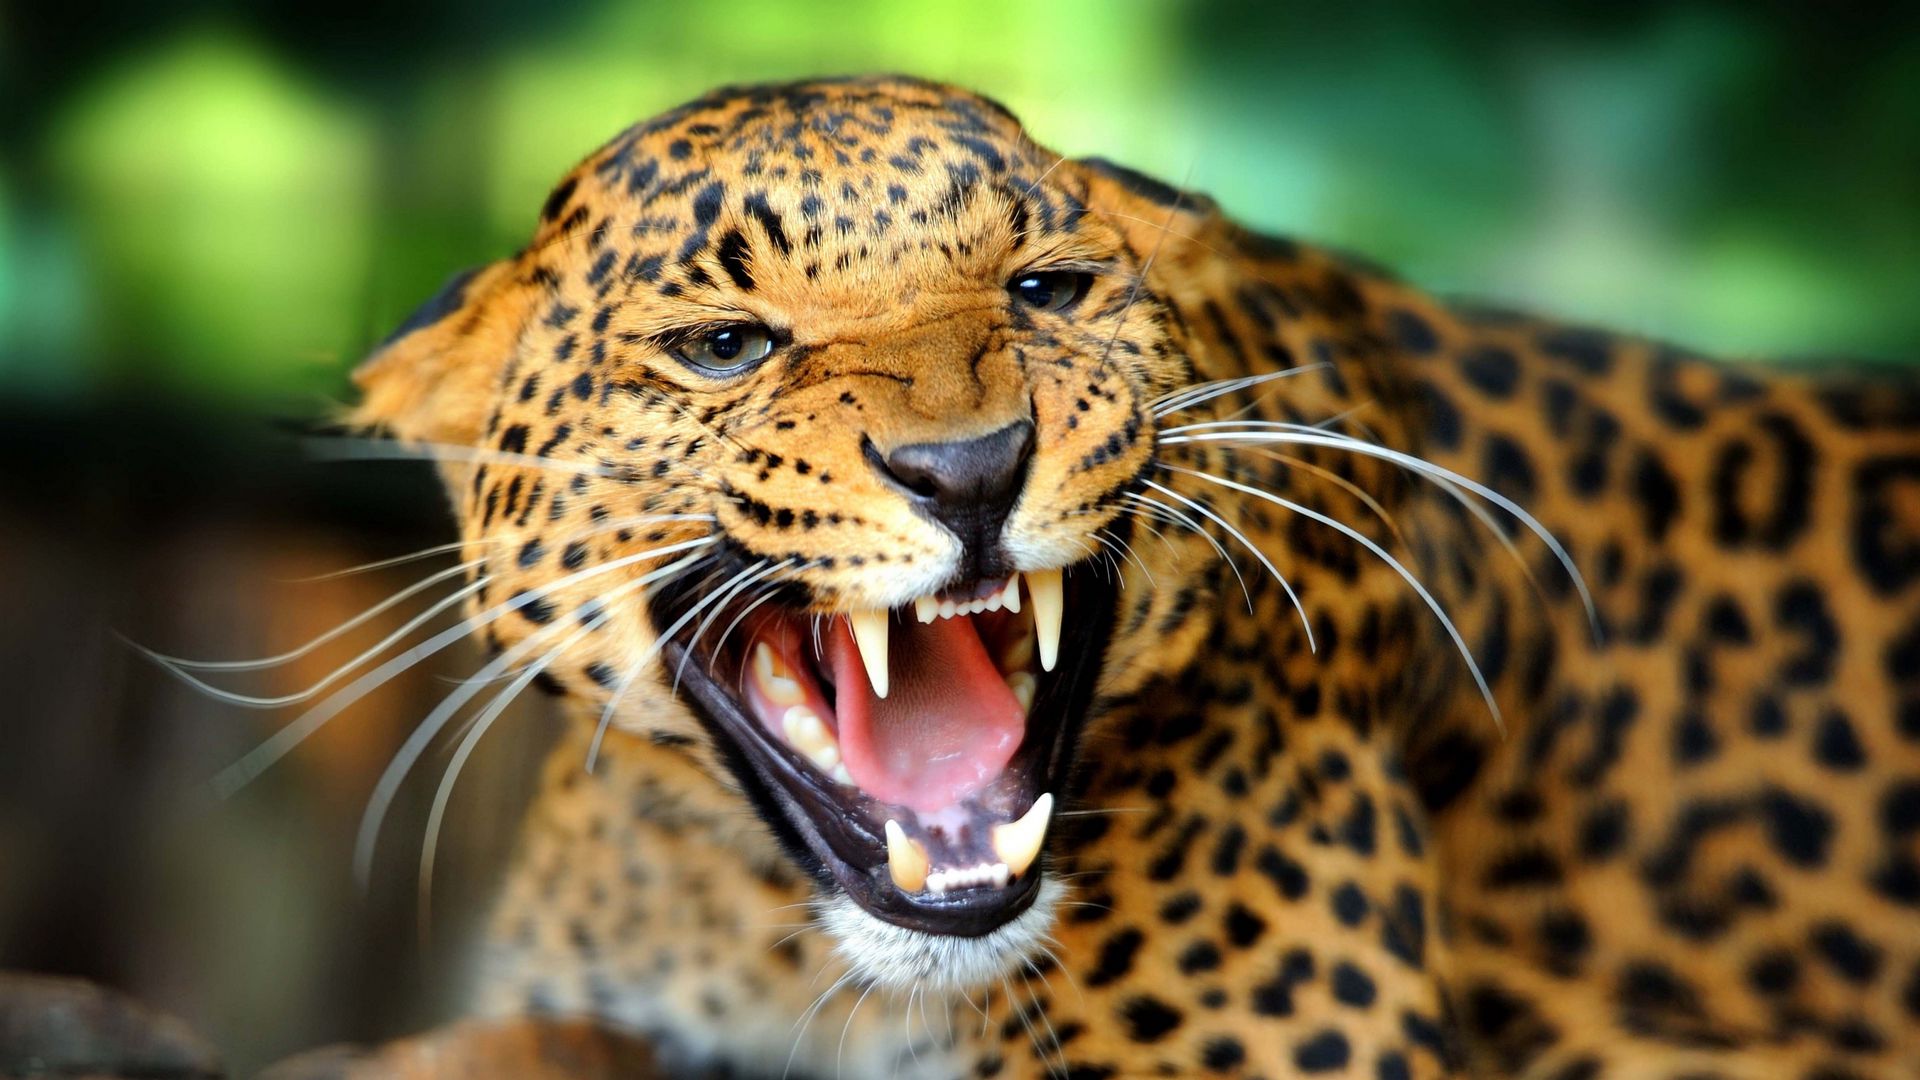 Download Wallpaper 1920x1080 Leopard Wild Cat Growl Snarl Rage